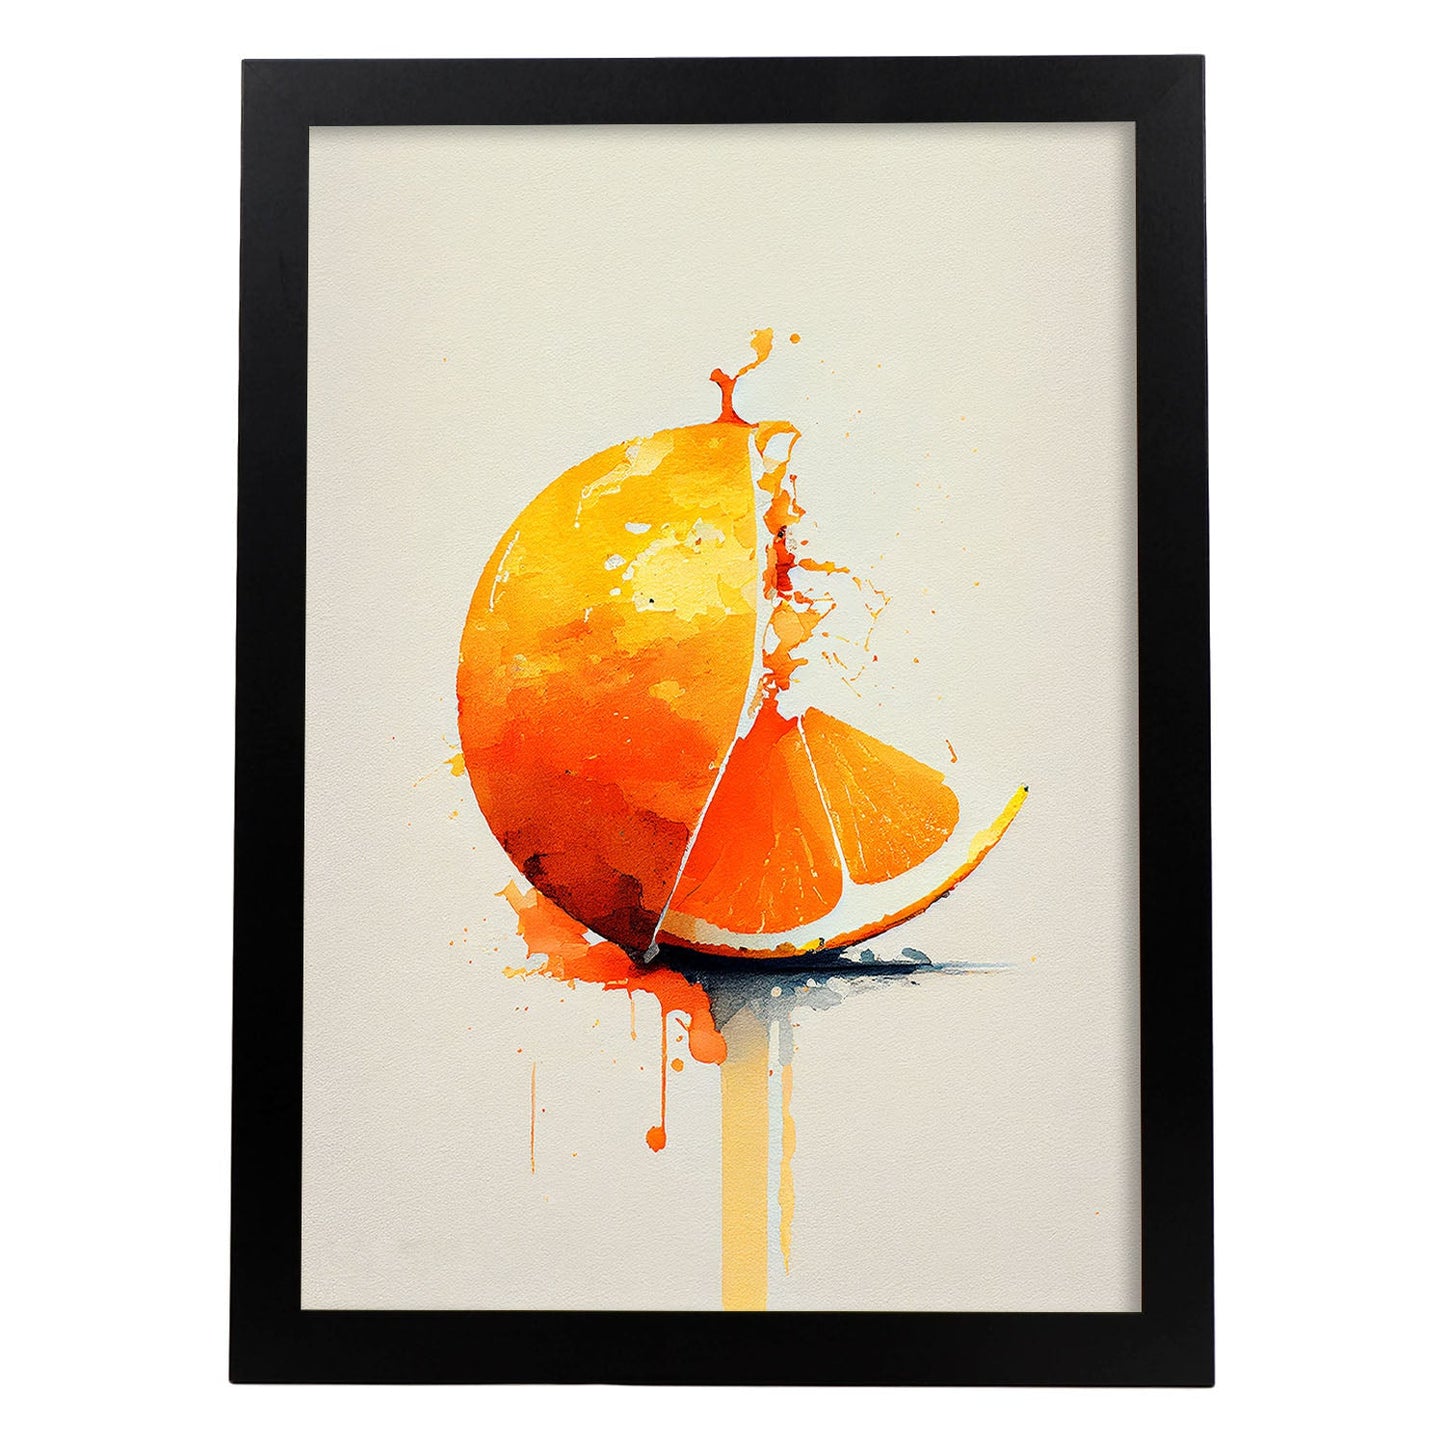 Nacnic minimalist Orange_1. Aesthetic Wall Art Prints for Bedroom or Living Room Design.